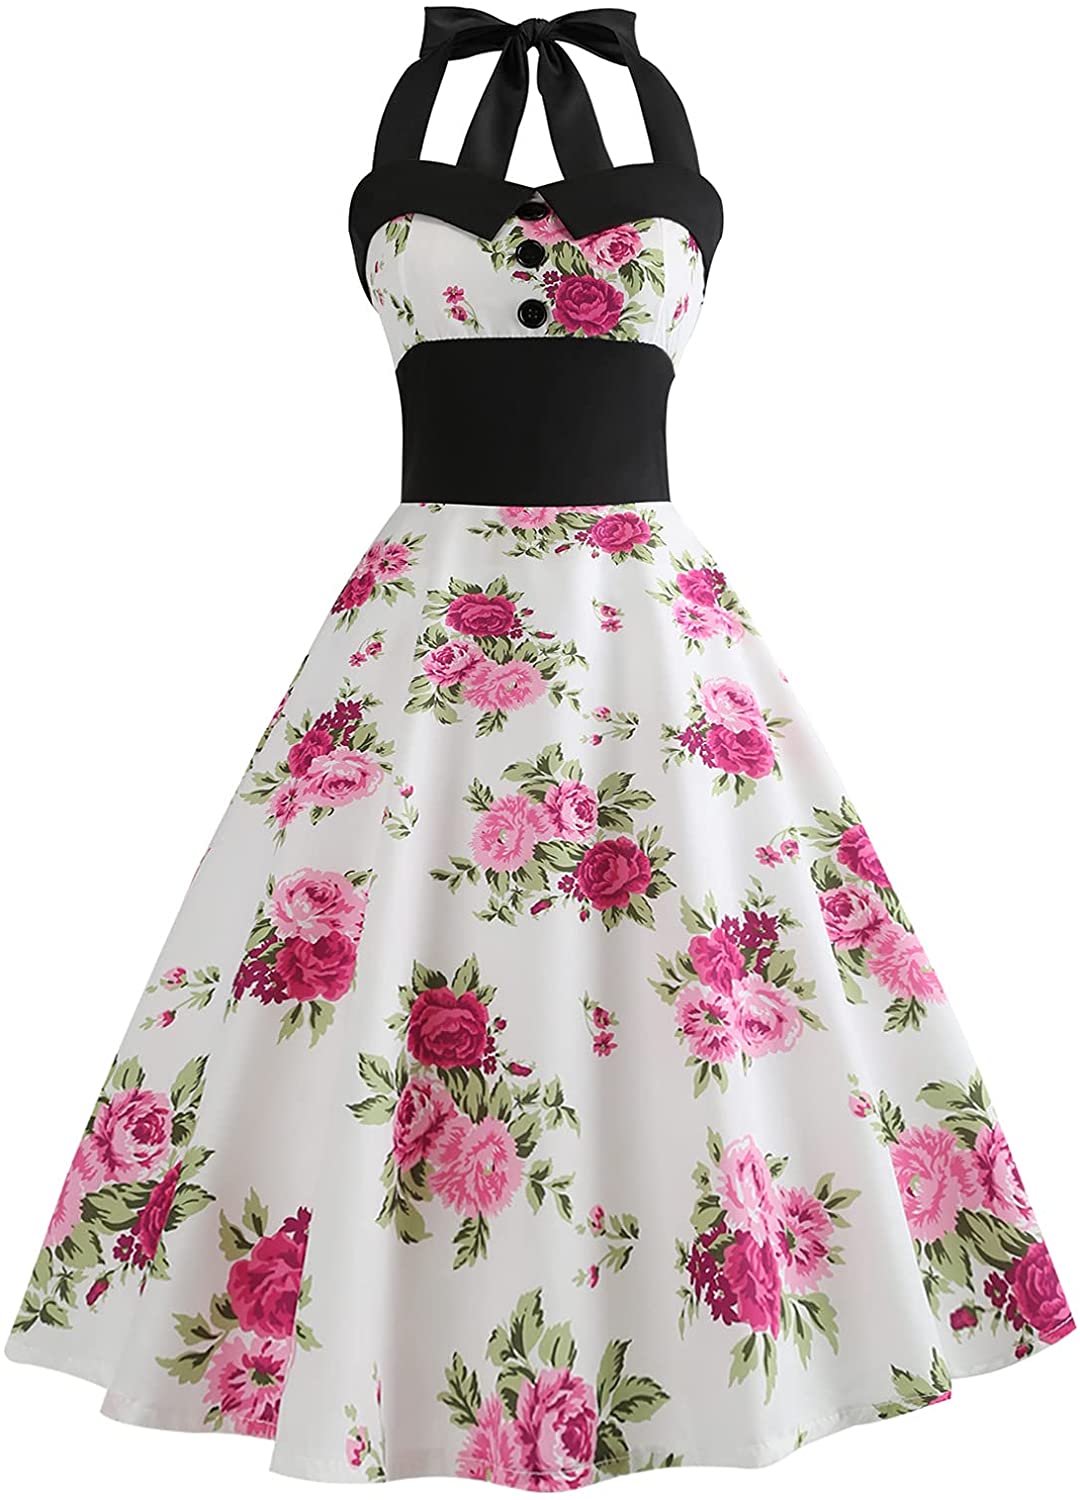 Vintage Women 1950s Rockabilly Swing Dress Pinup 50s Retro Hepburn Style  Halterneck A-Line Dresses